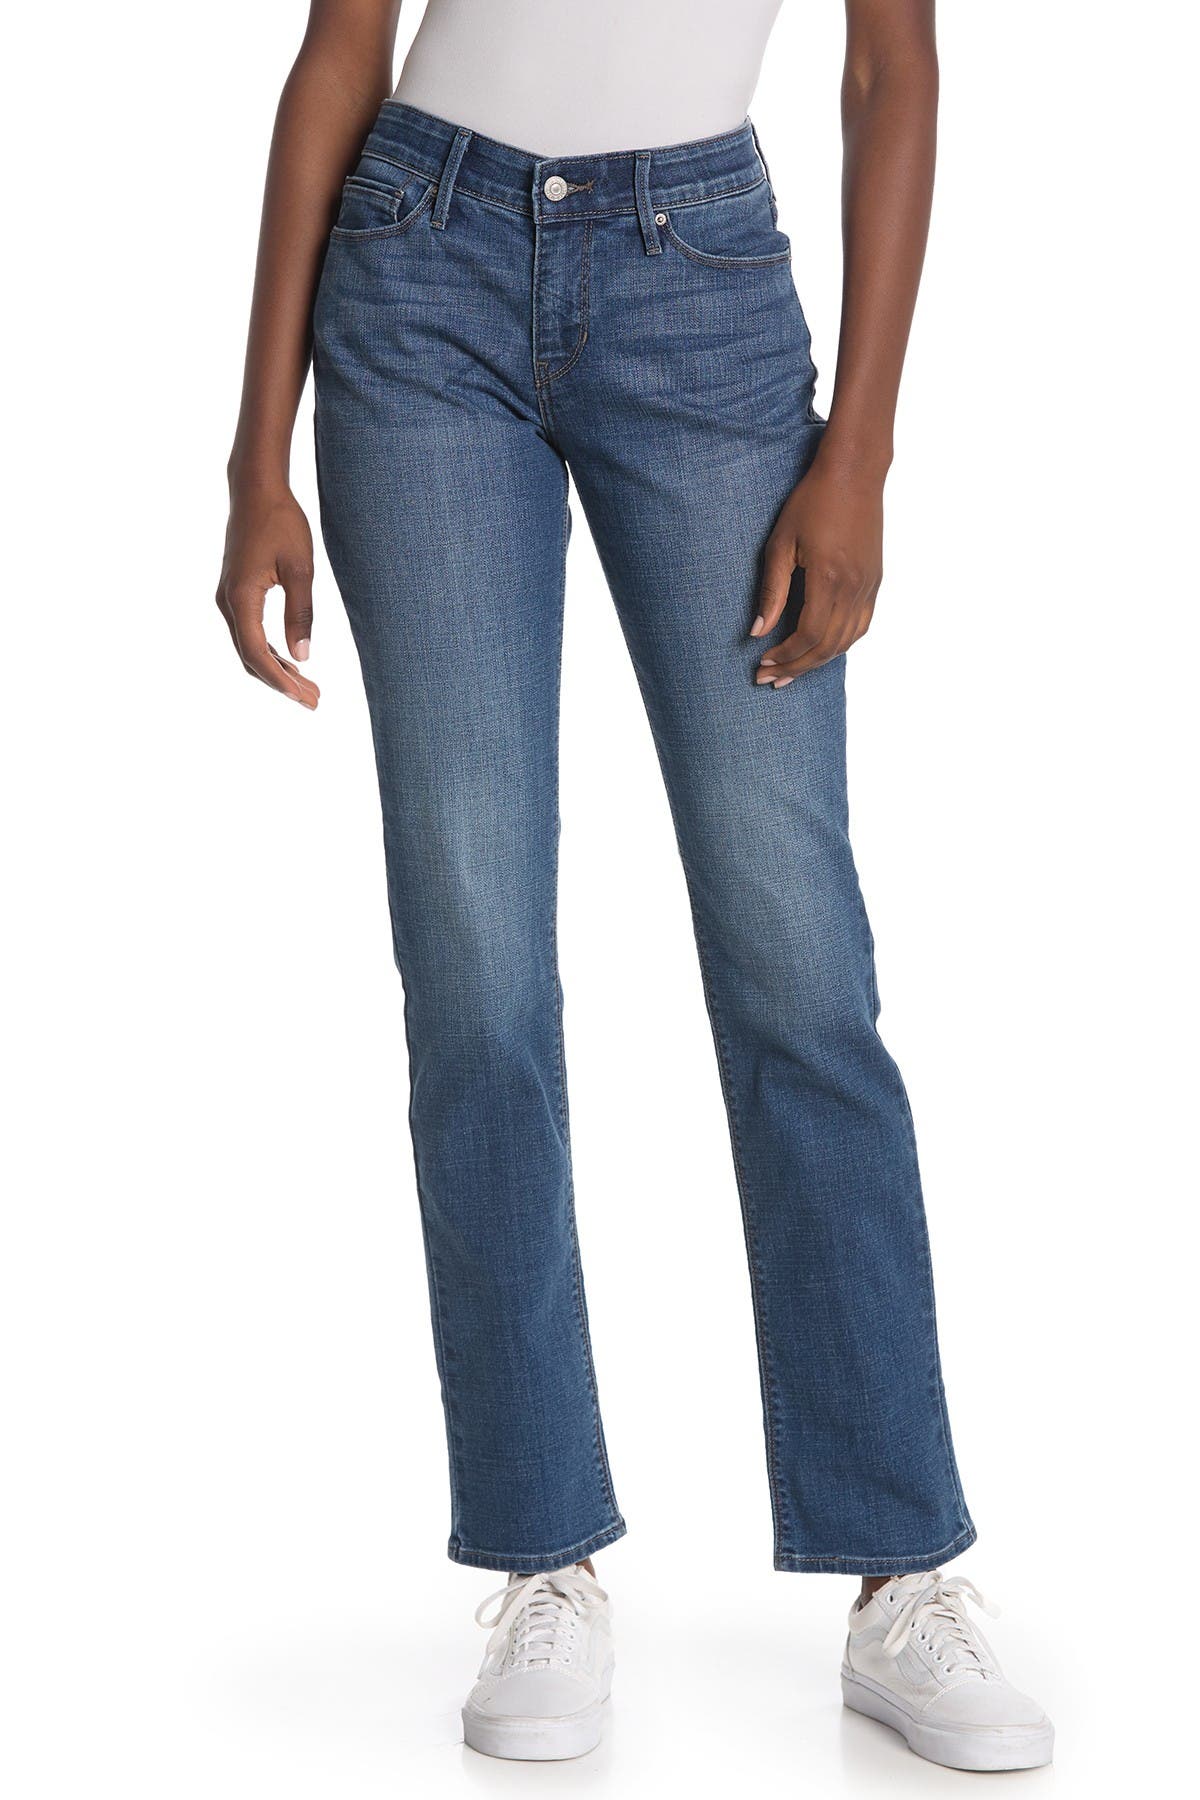 levi 525 perfect waist jeans